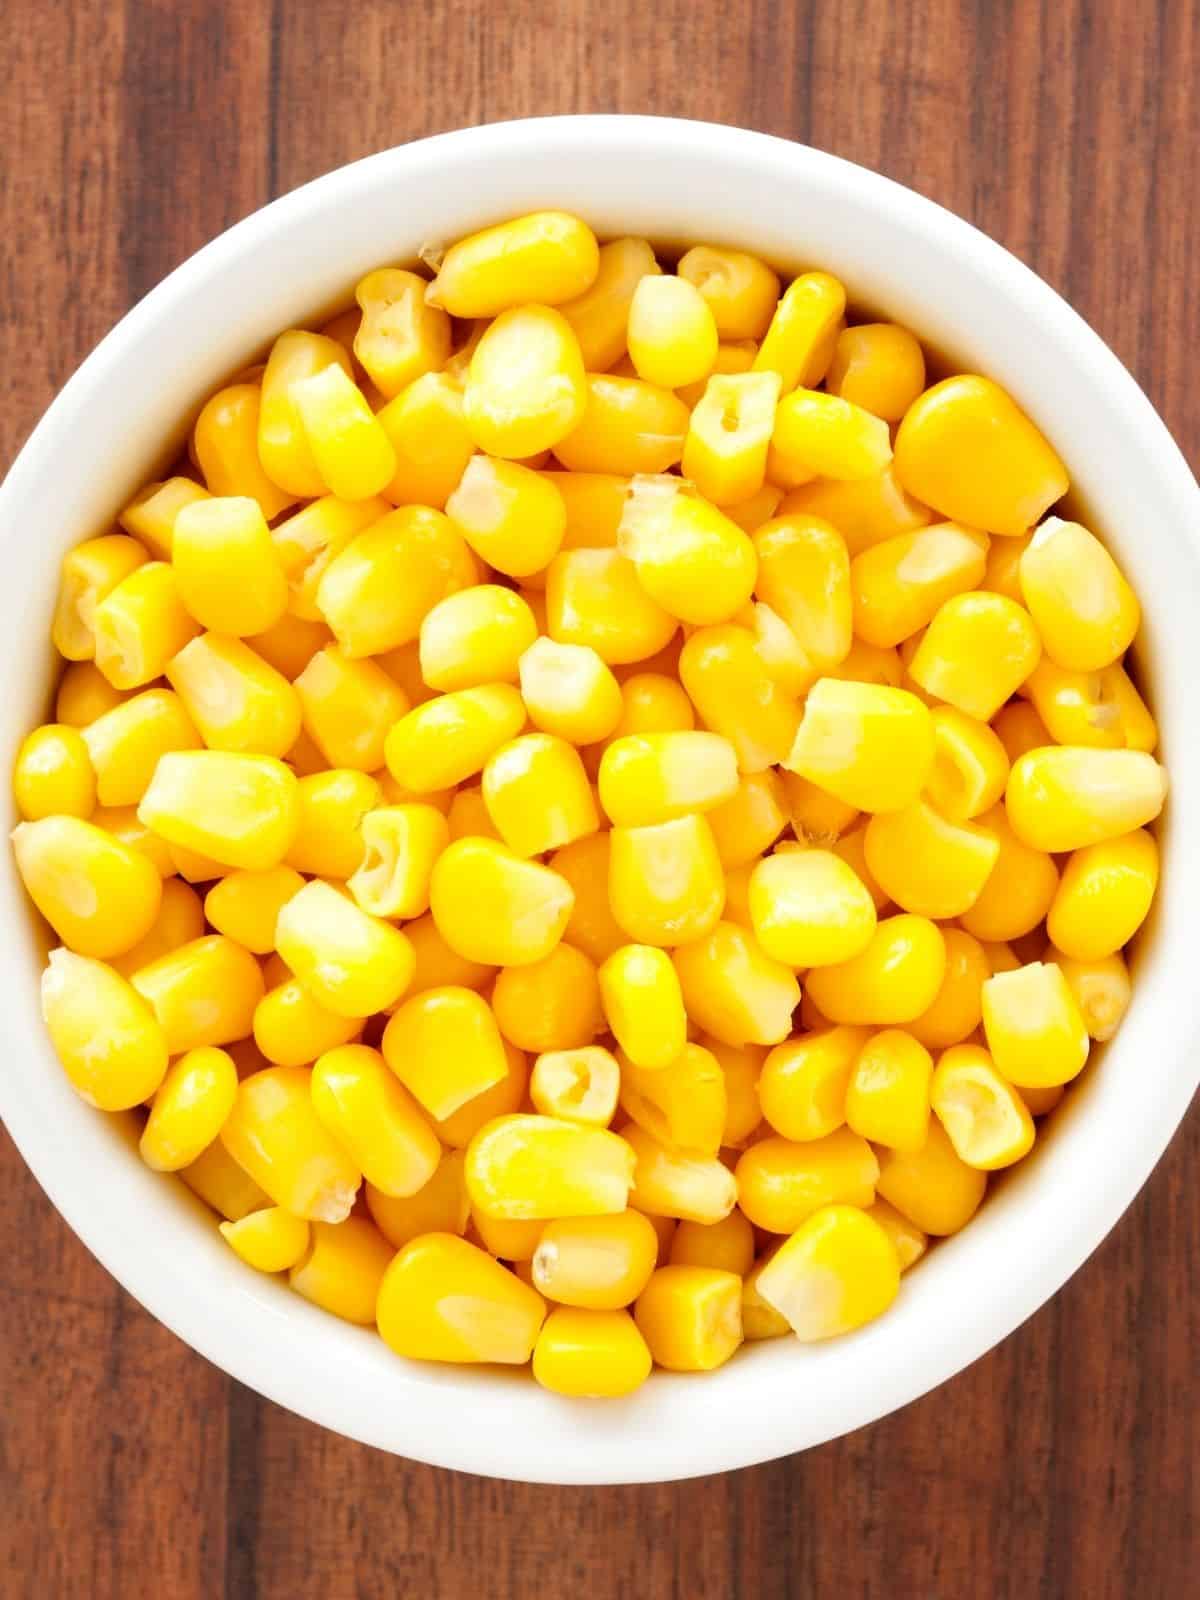 A large white bowl of yellow corn.